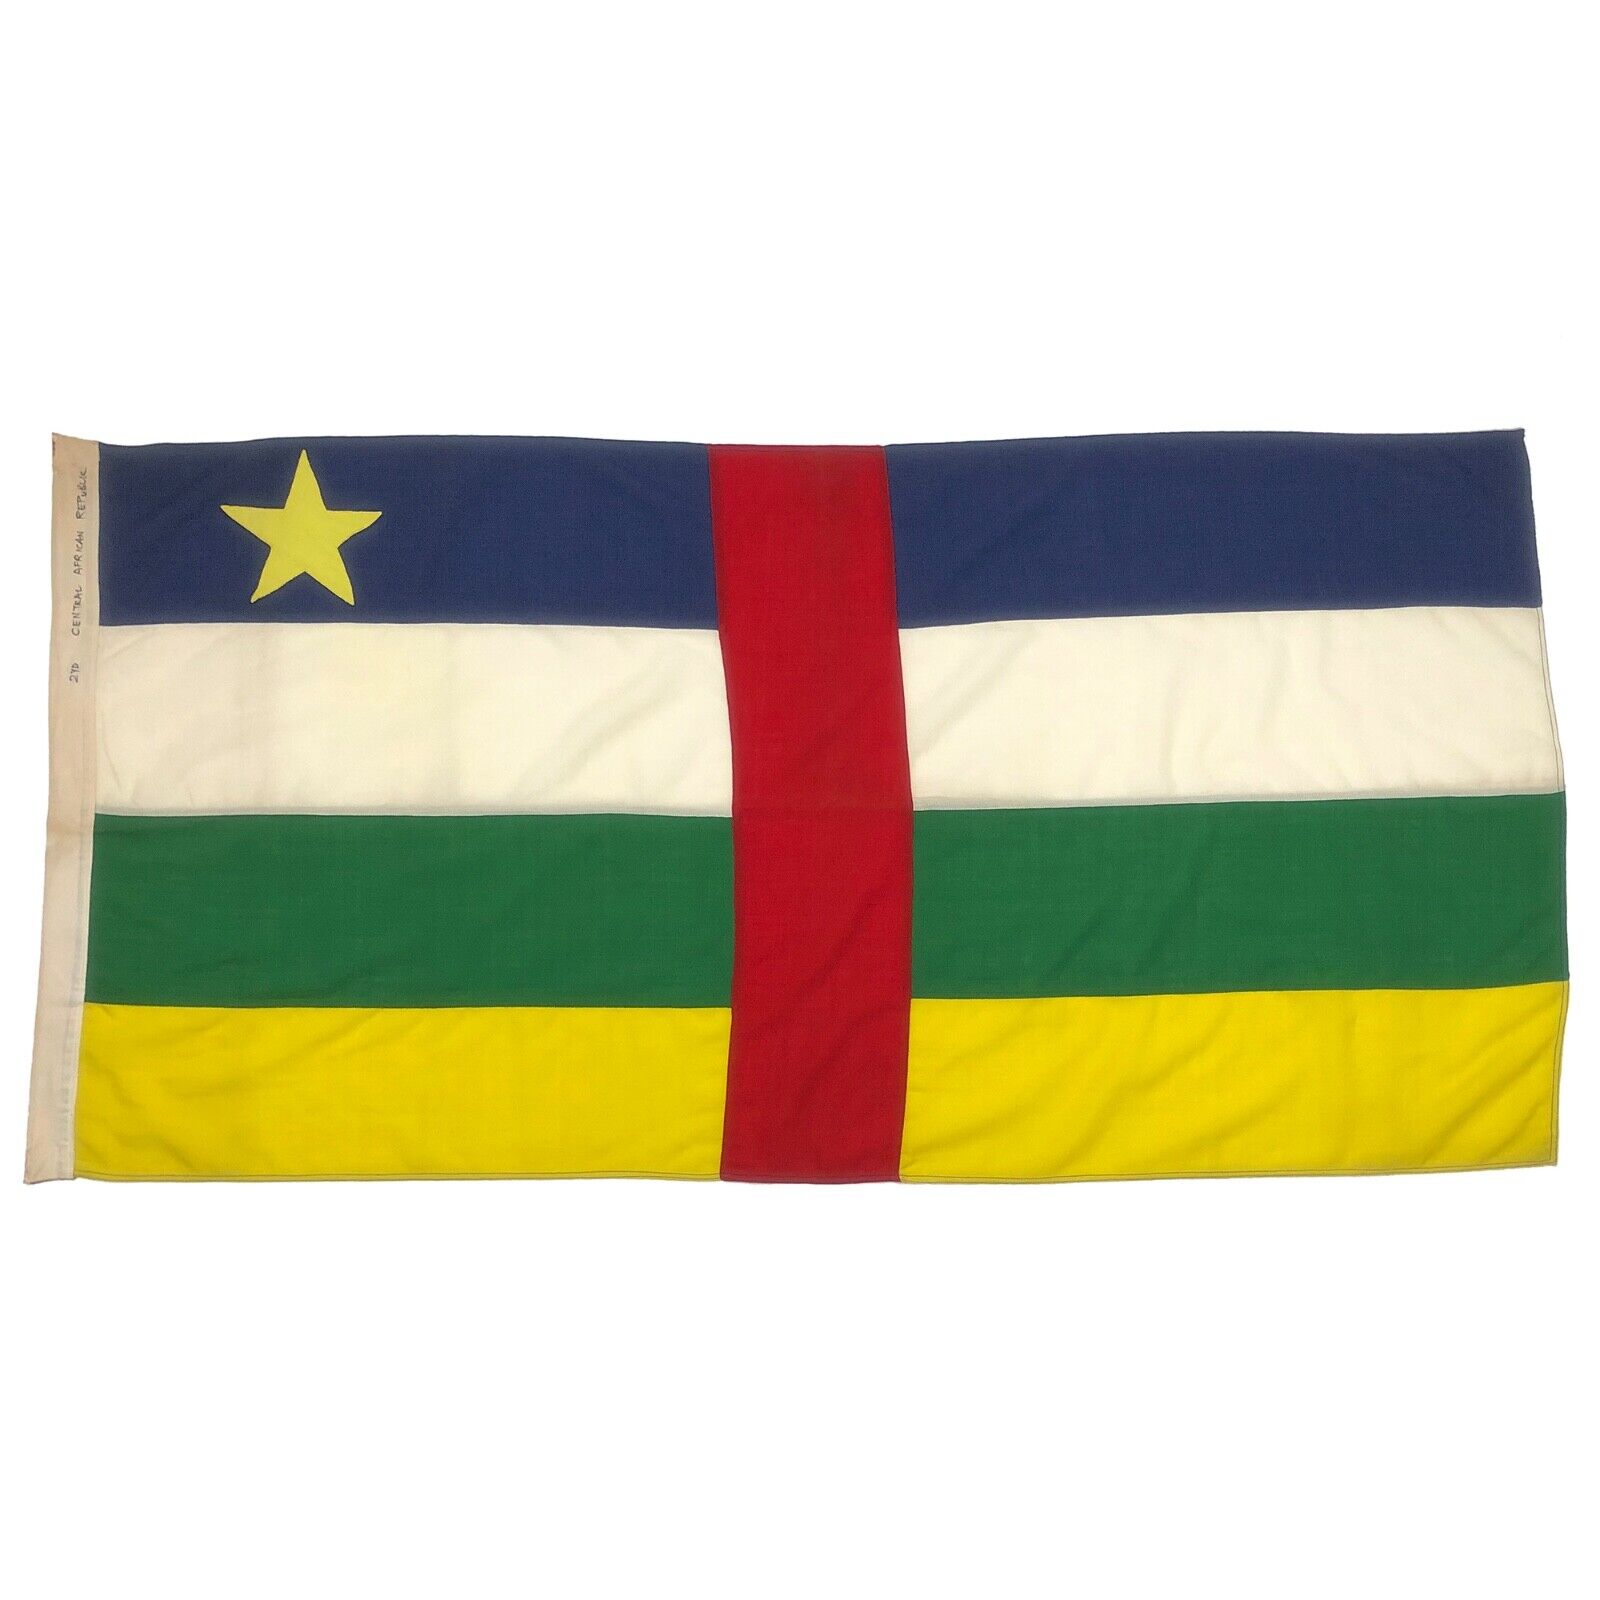 Vintage Sewn Central African Republic Nautical Flag Wool Blend Textile Art Decor